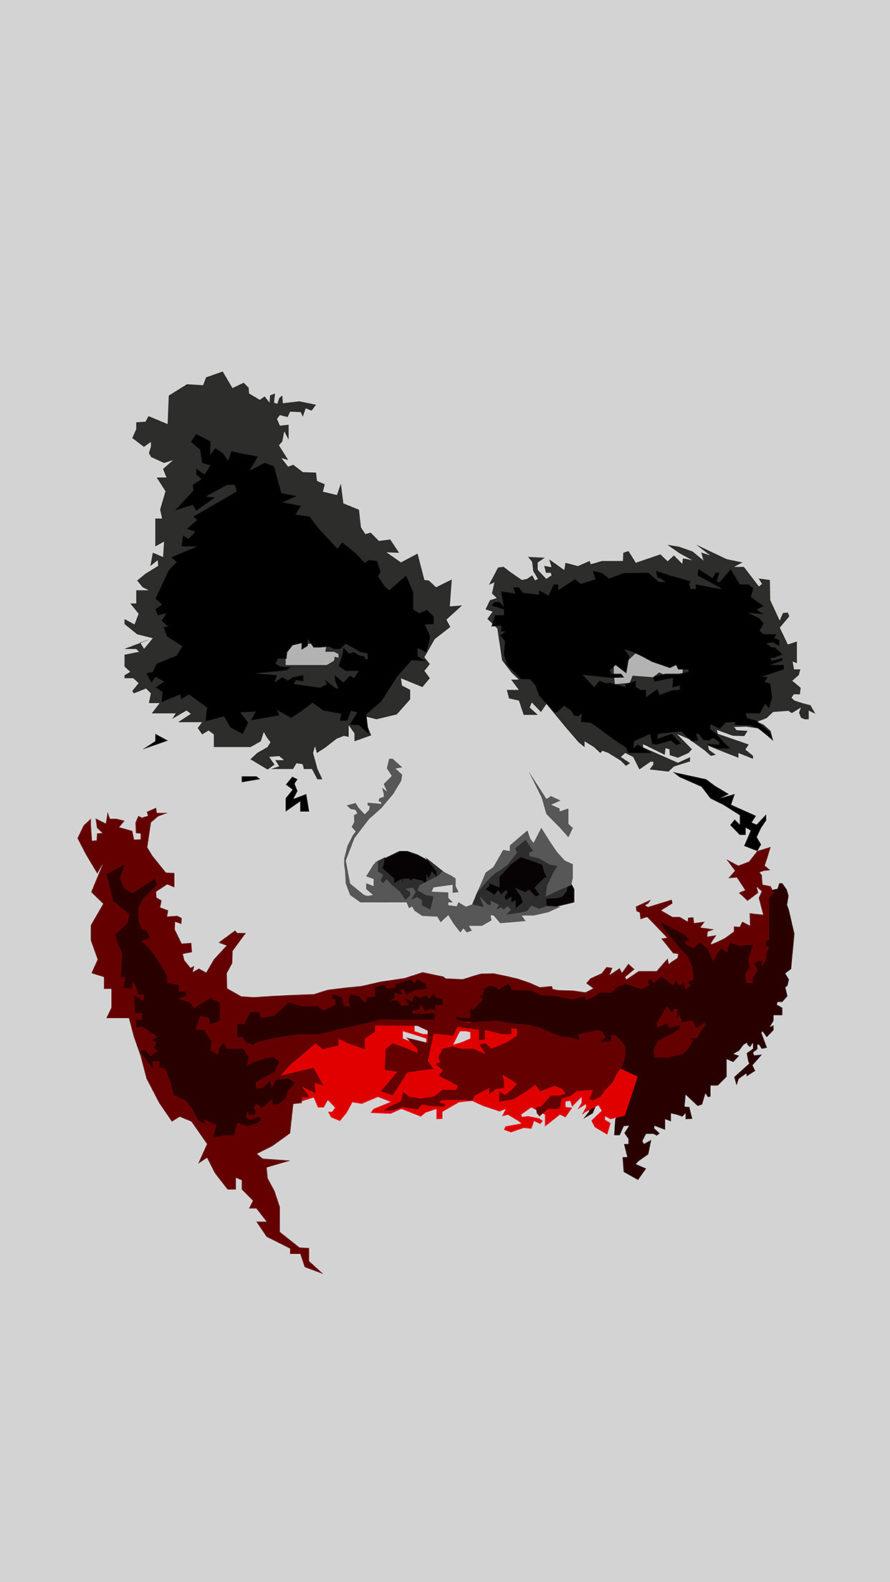 Joker Wallpaper To Download